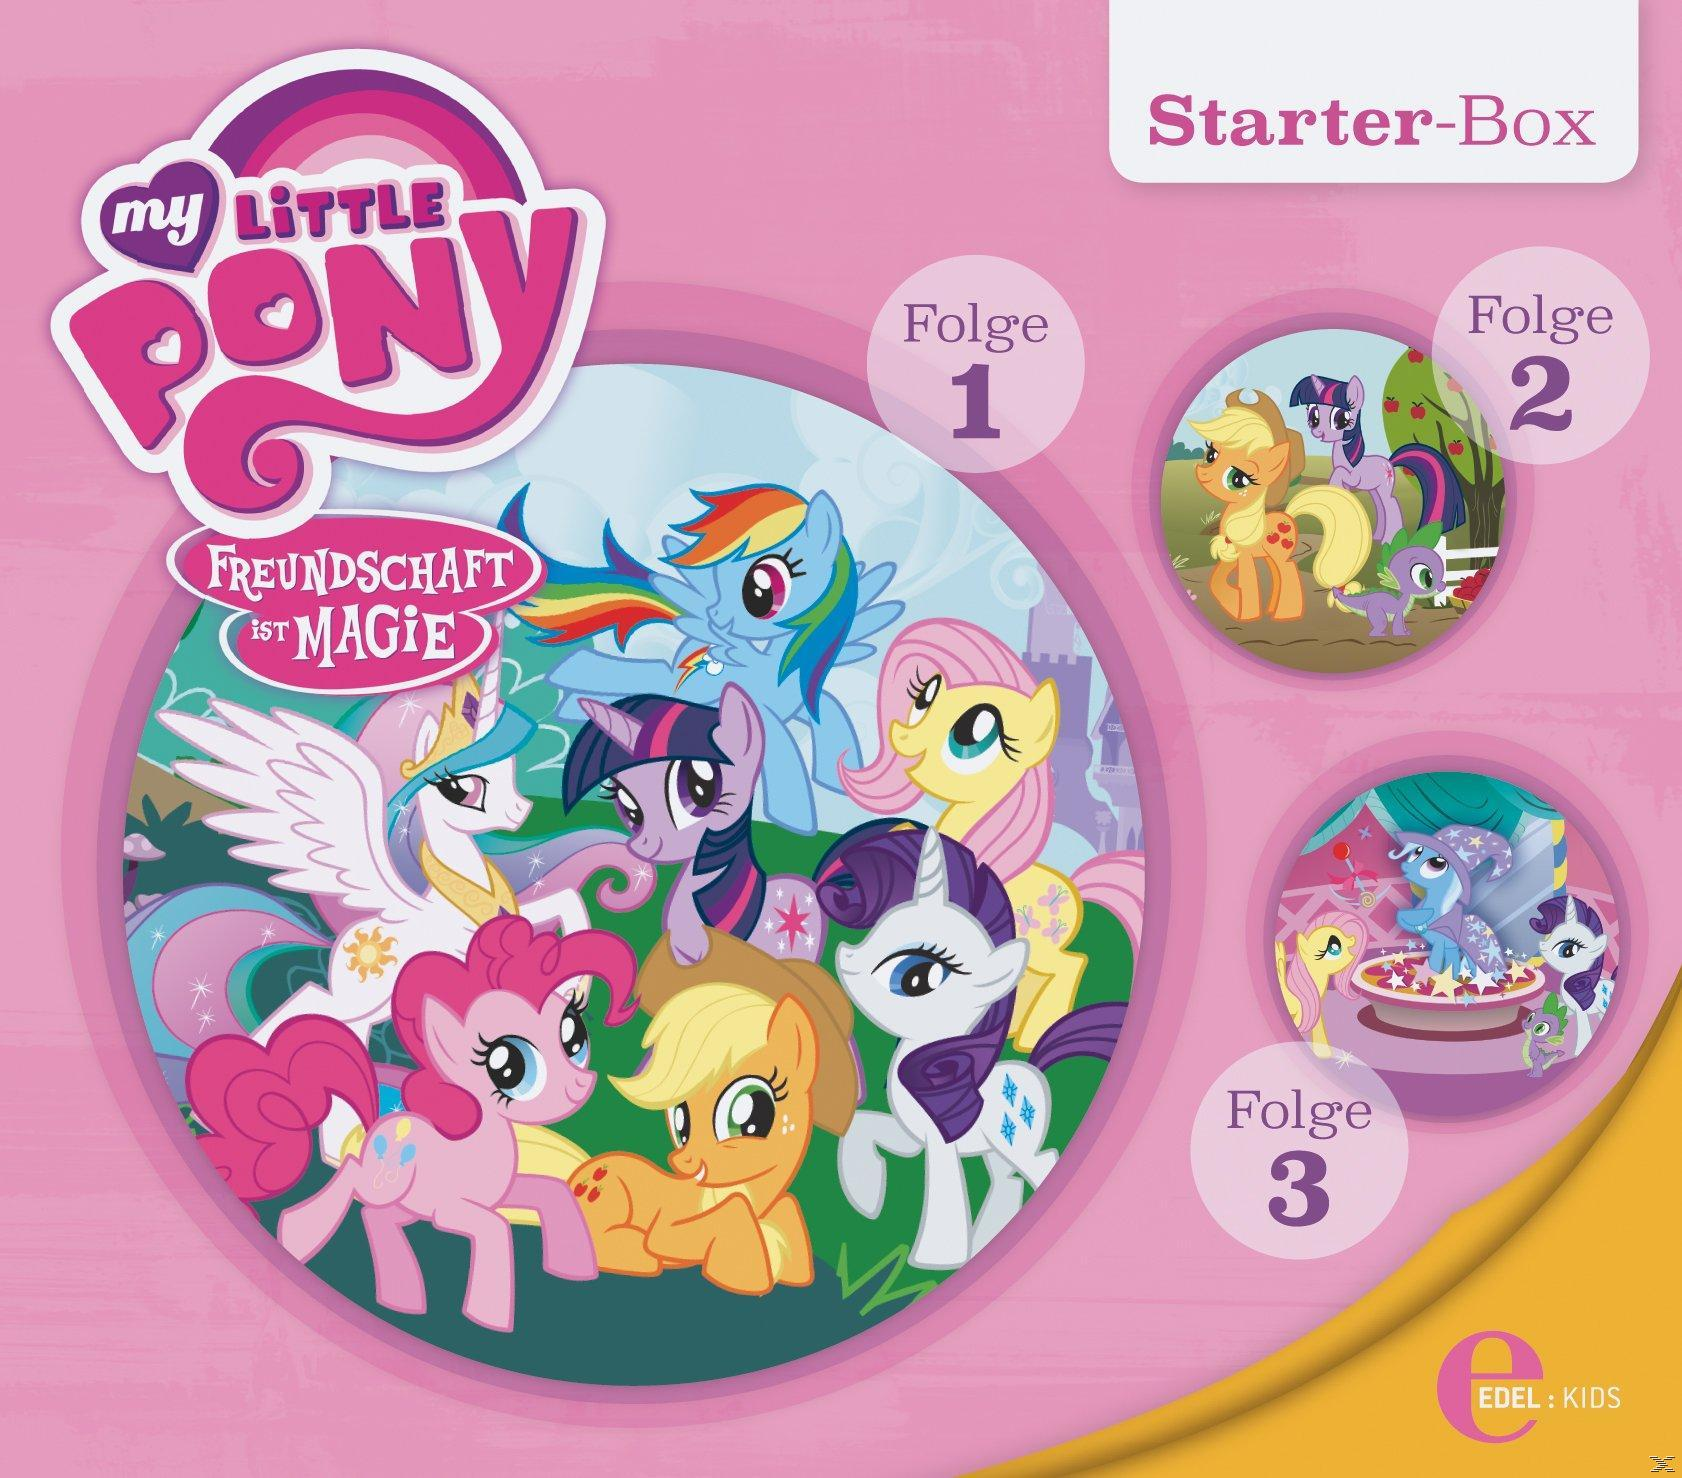 Little Pony (CD) - My Pony My Starter-Box little - -